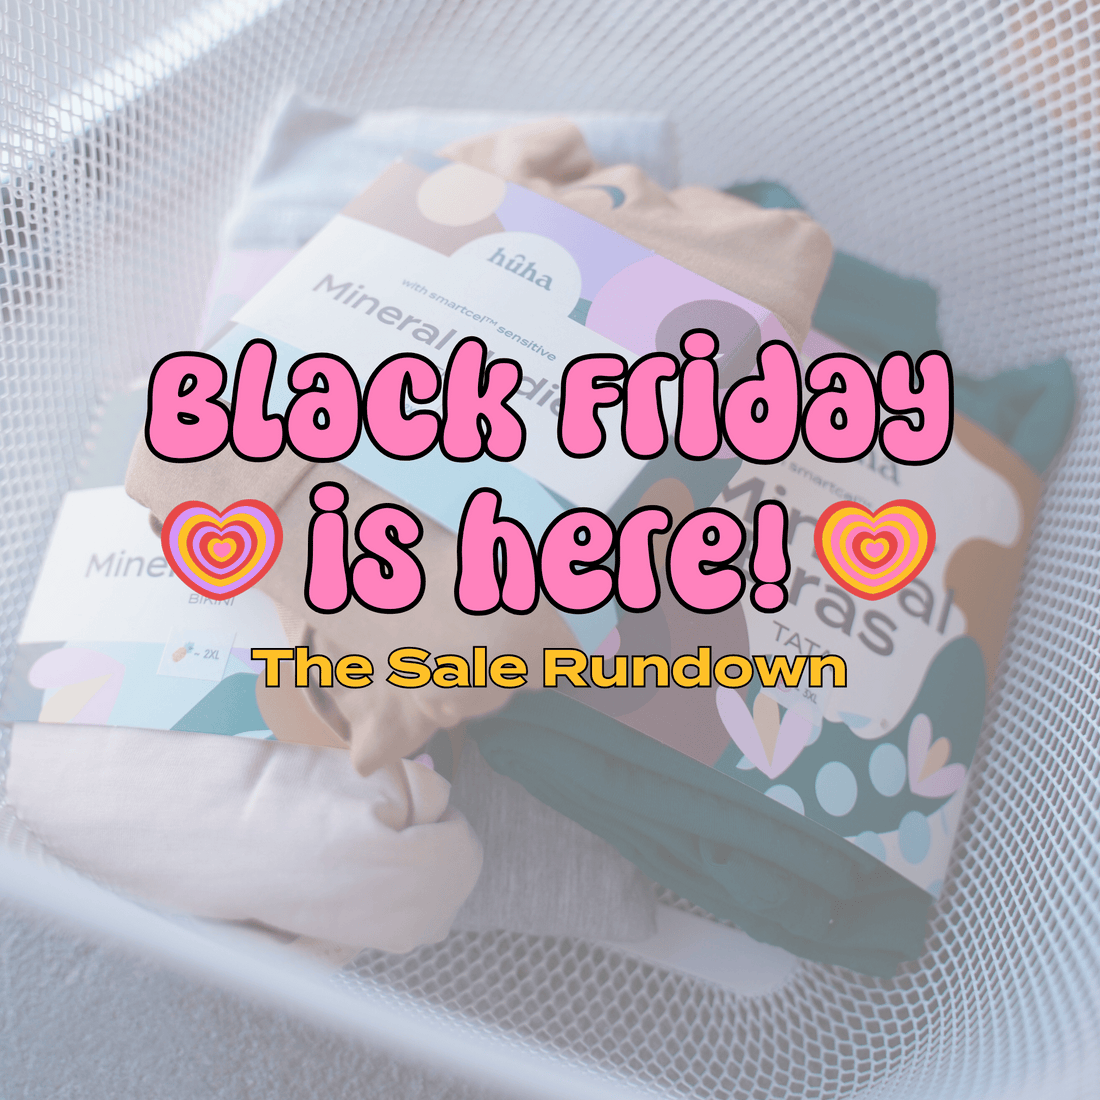 Black Friday special underwear offers!